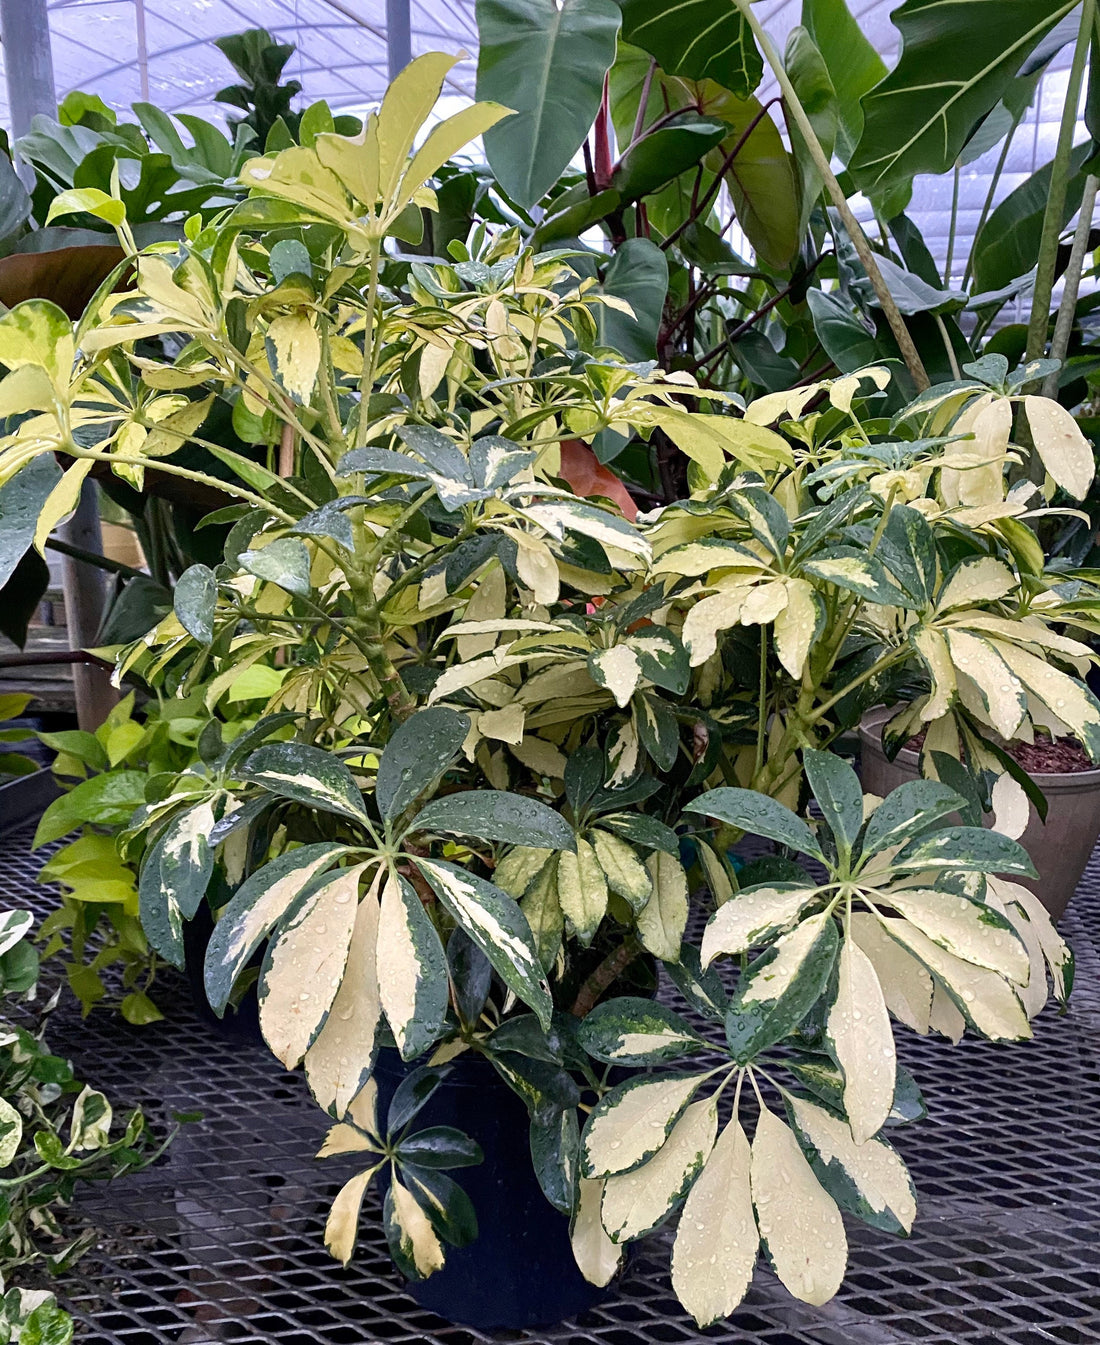 Trinette Arbaricola, Umbrella Tree Live Plant